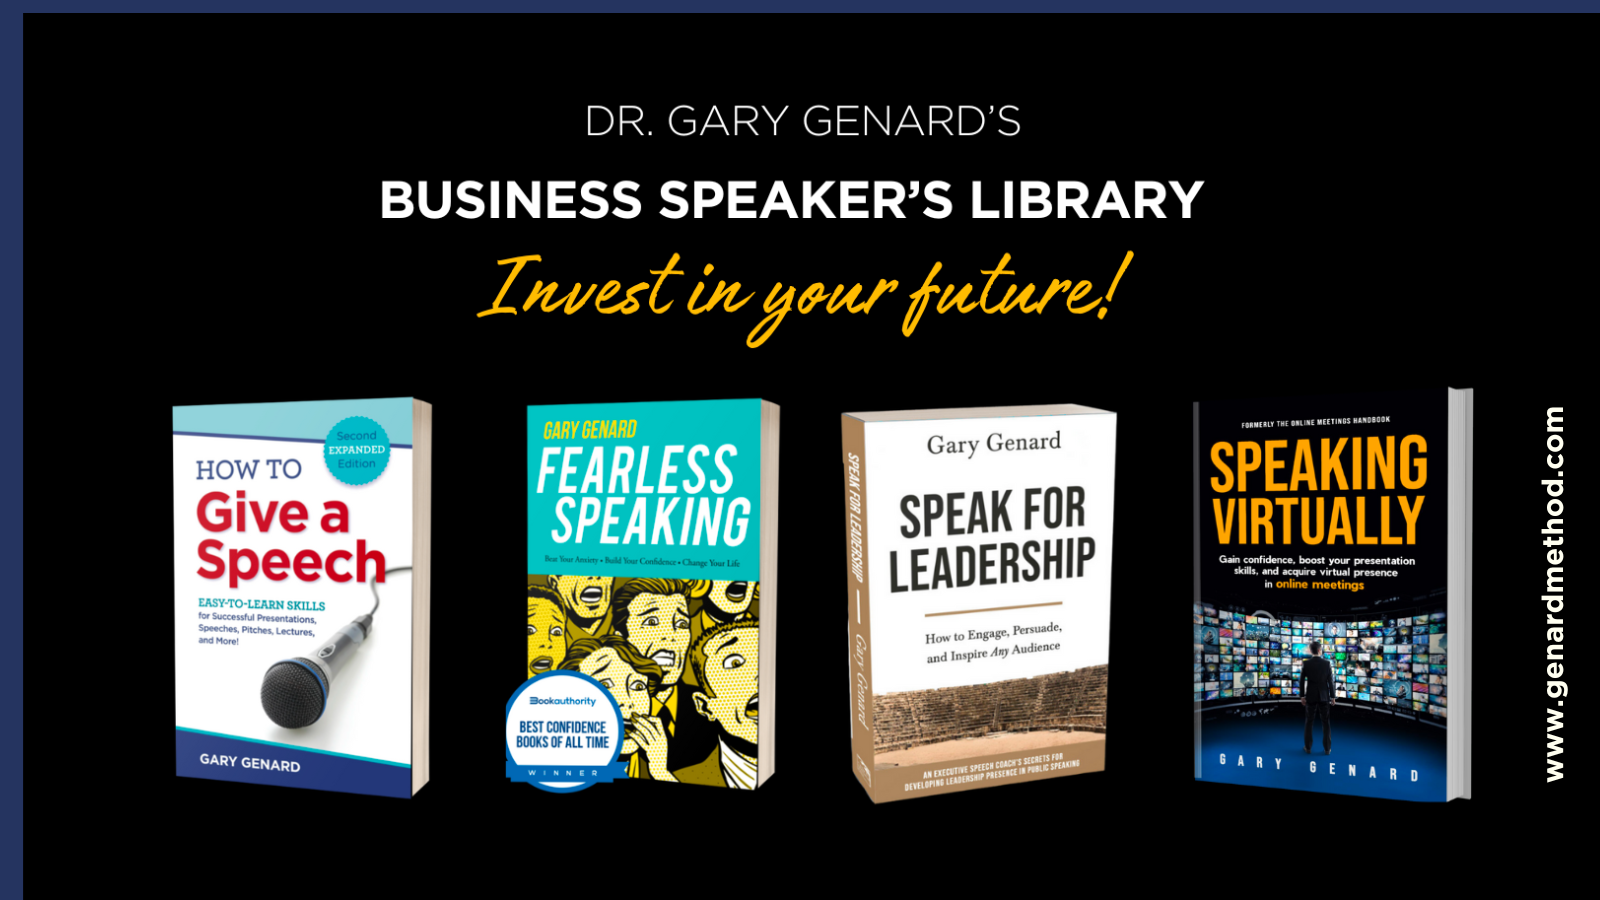 Speech expert Dr. Gary Genard's Business Speaker's Library